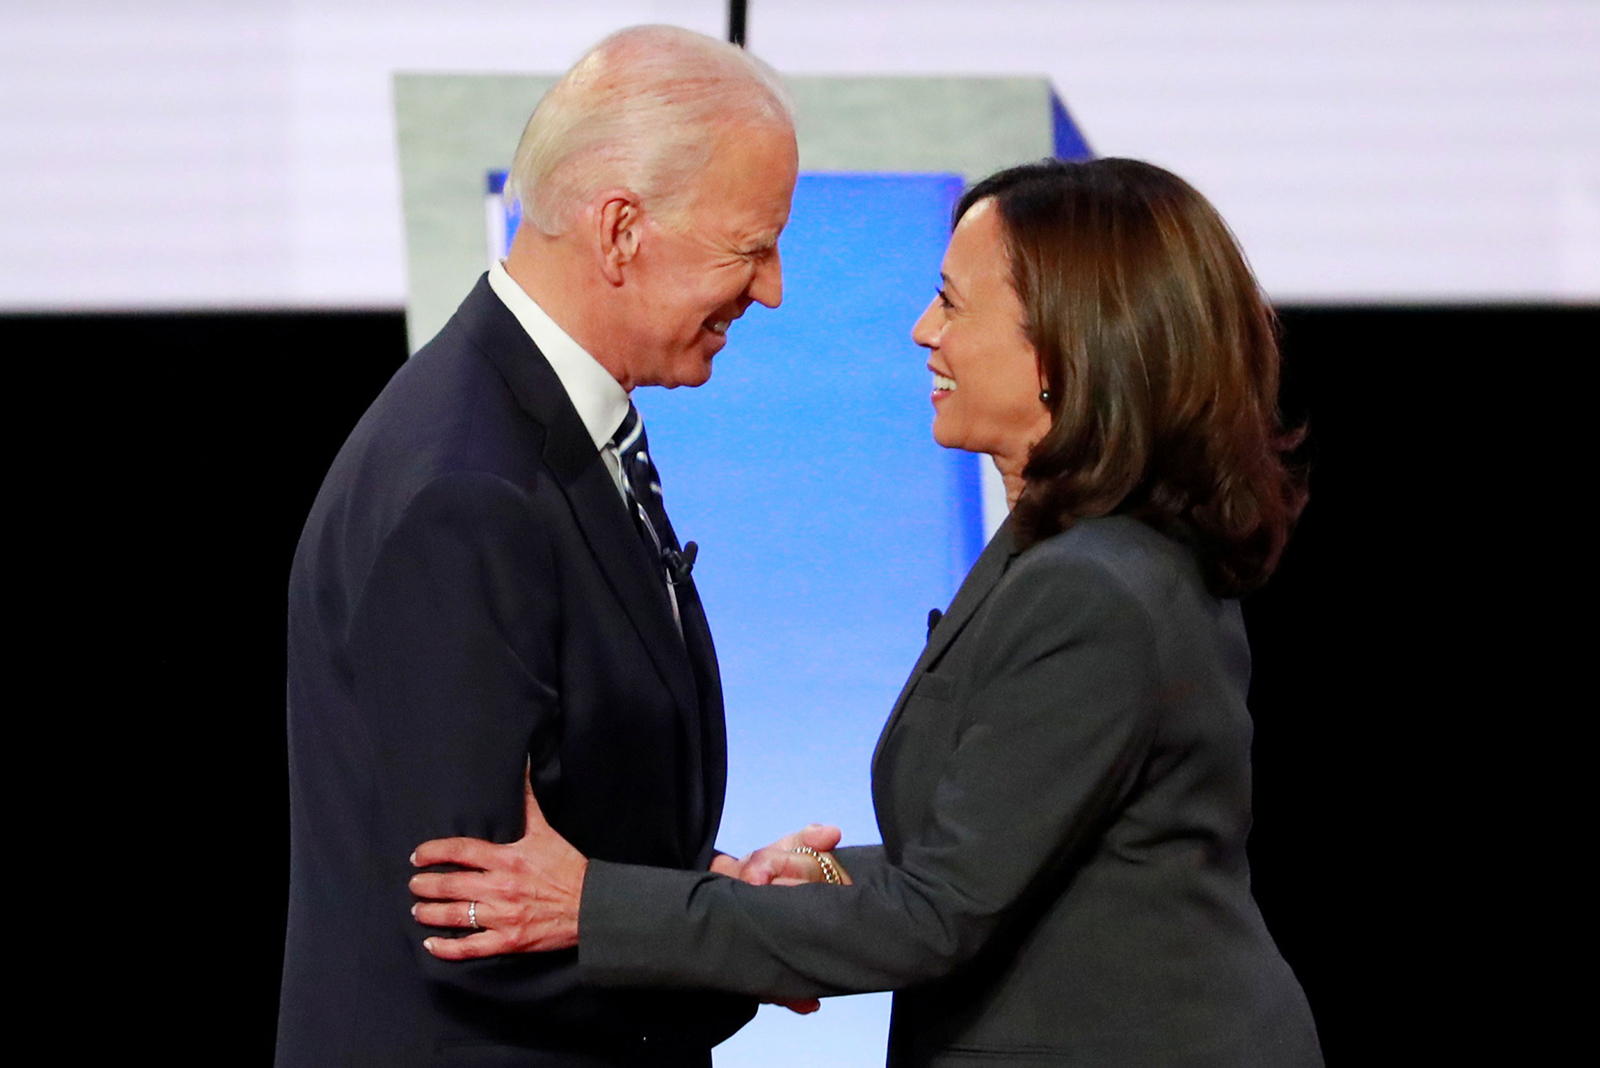 Joe Biden désigne Kamala Harris comme colistière, Donald Trump contre-attaque